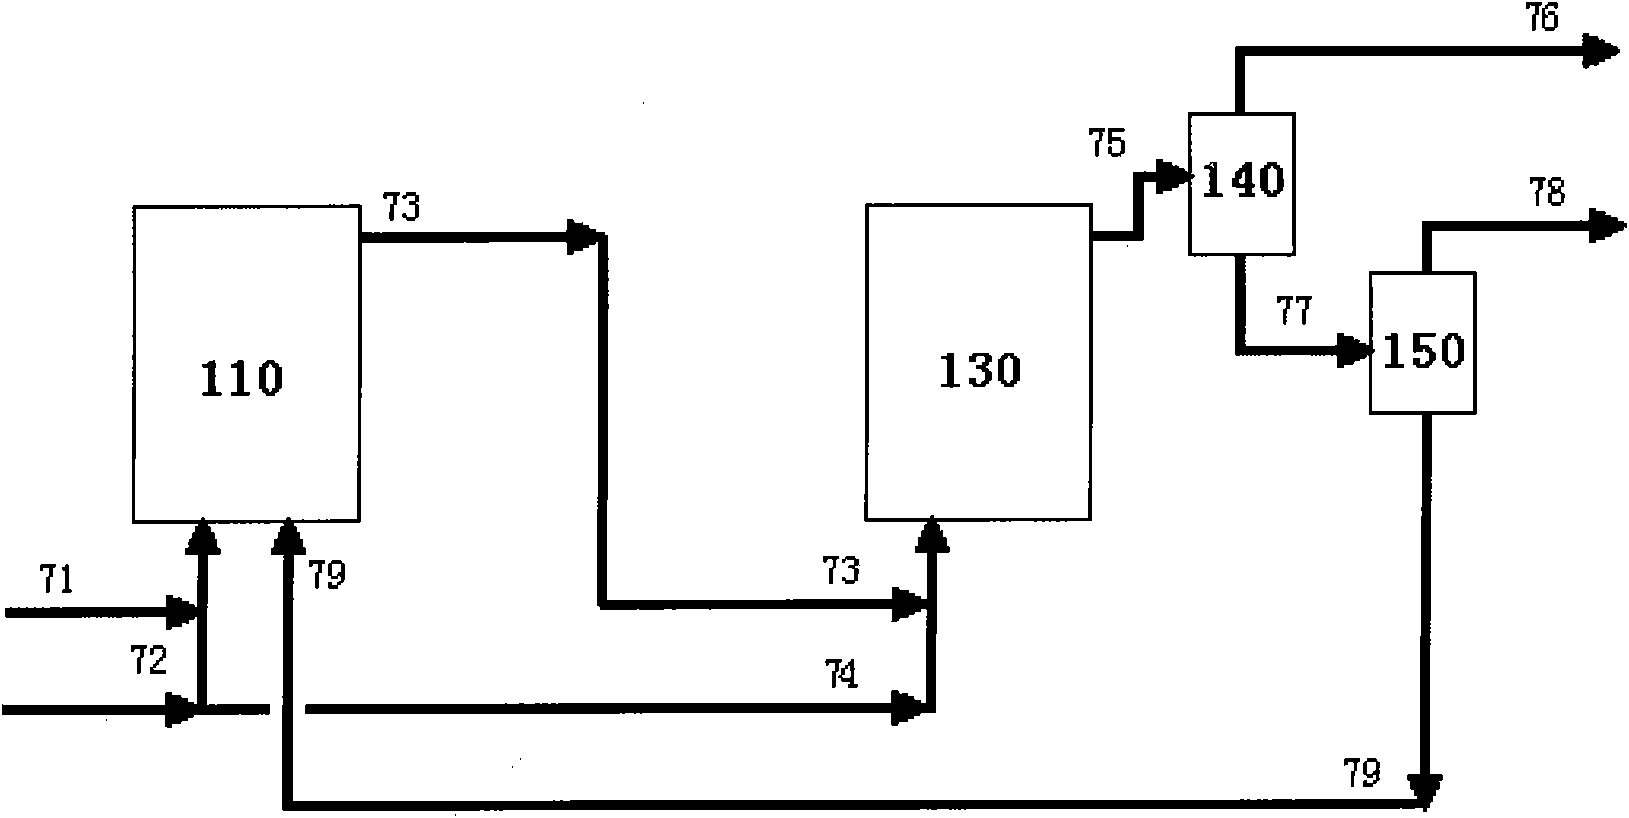 Preparation method for 2-propyl enanthol